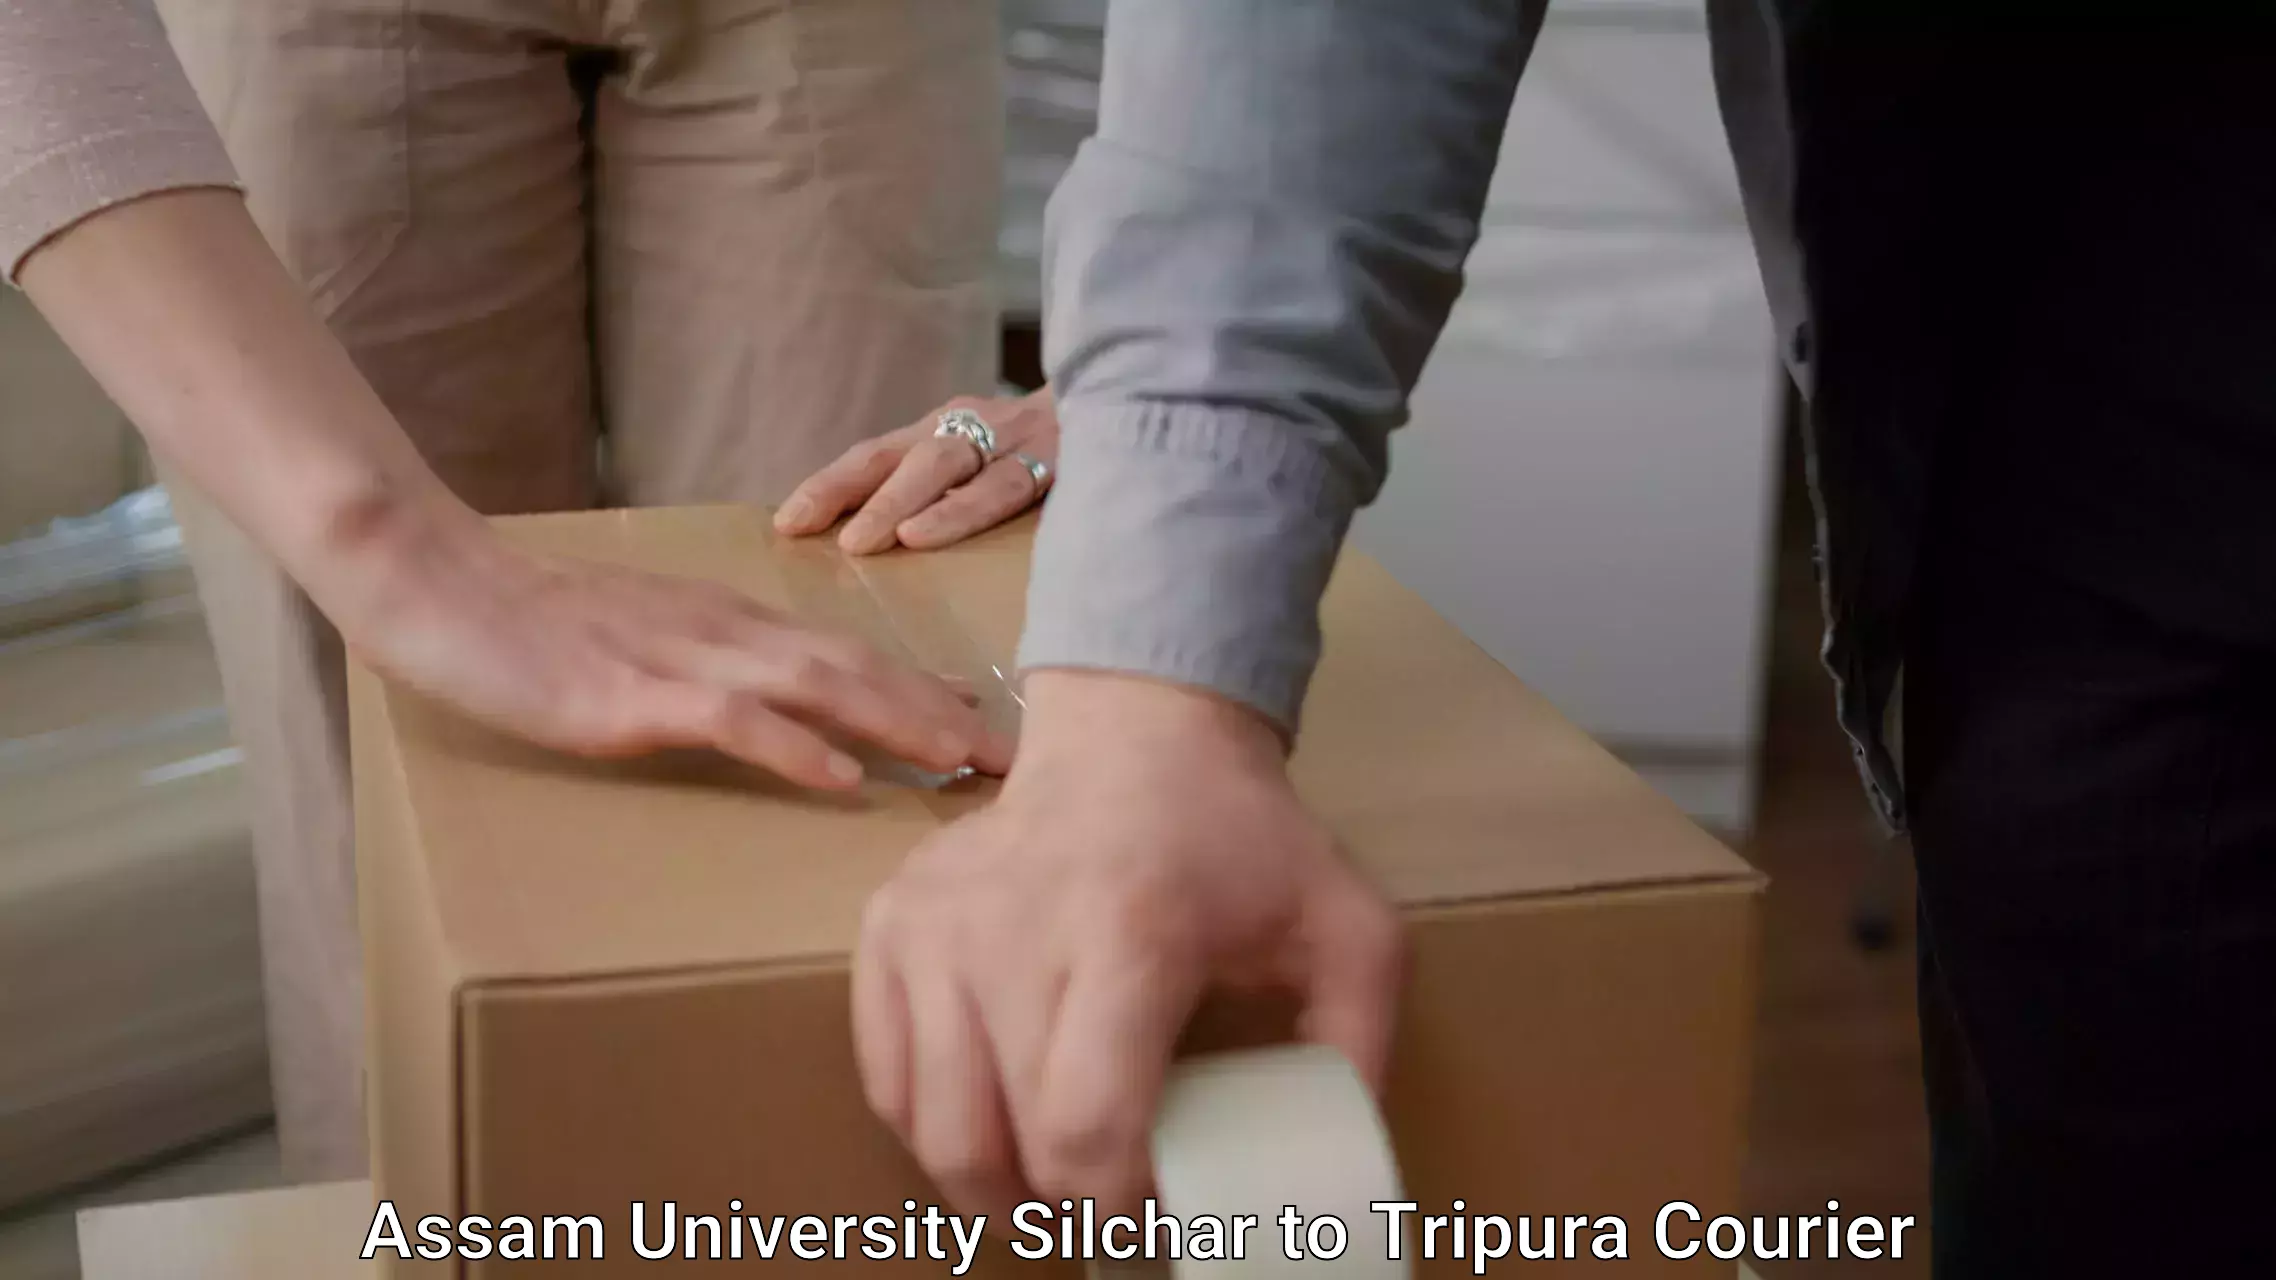 Professional furniture movers Assam University Silchar to Agartala